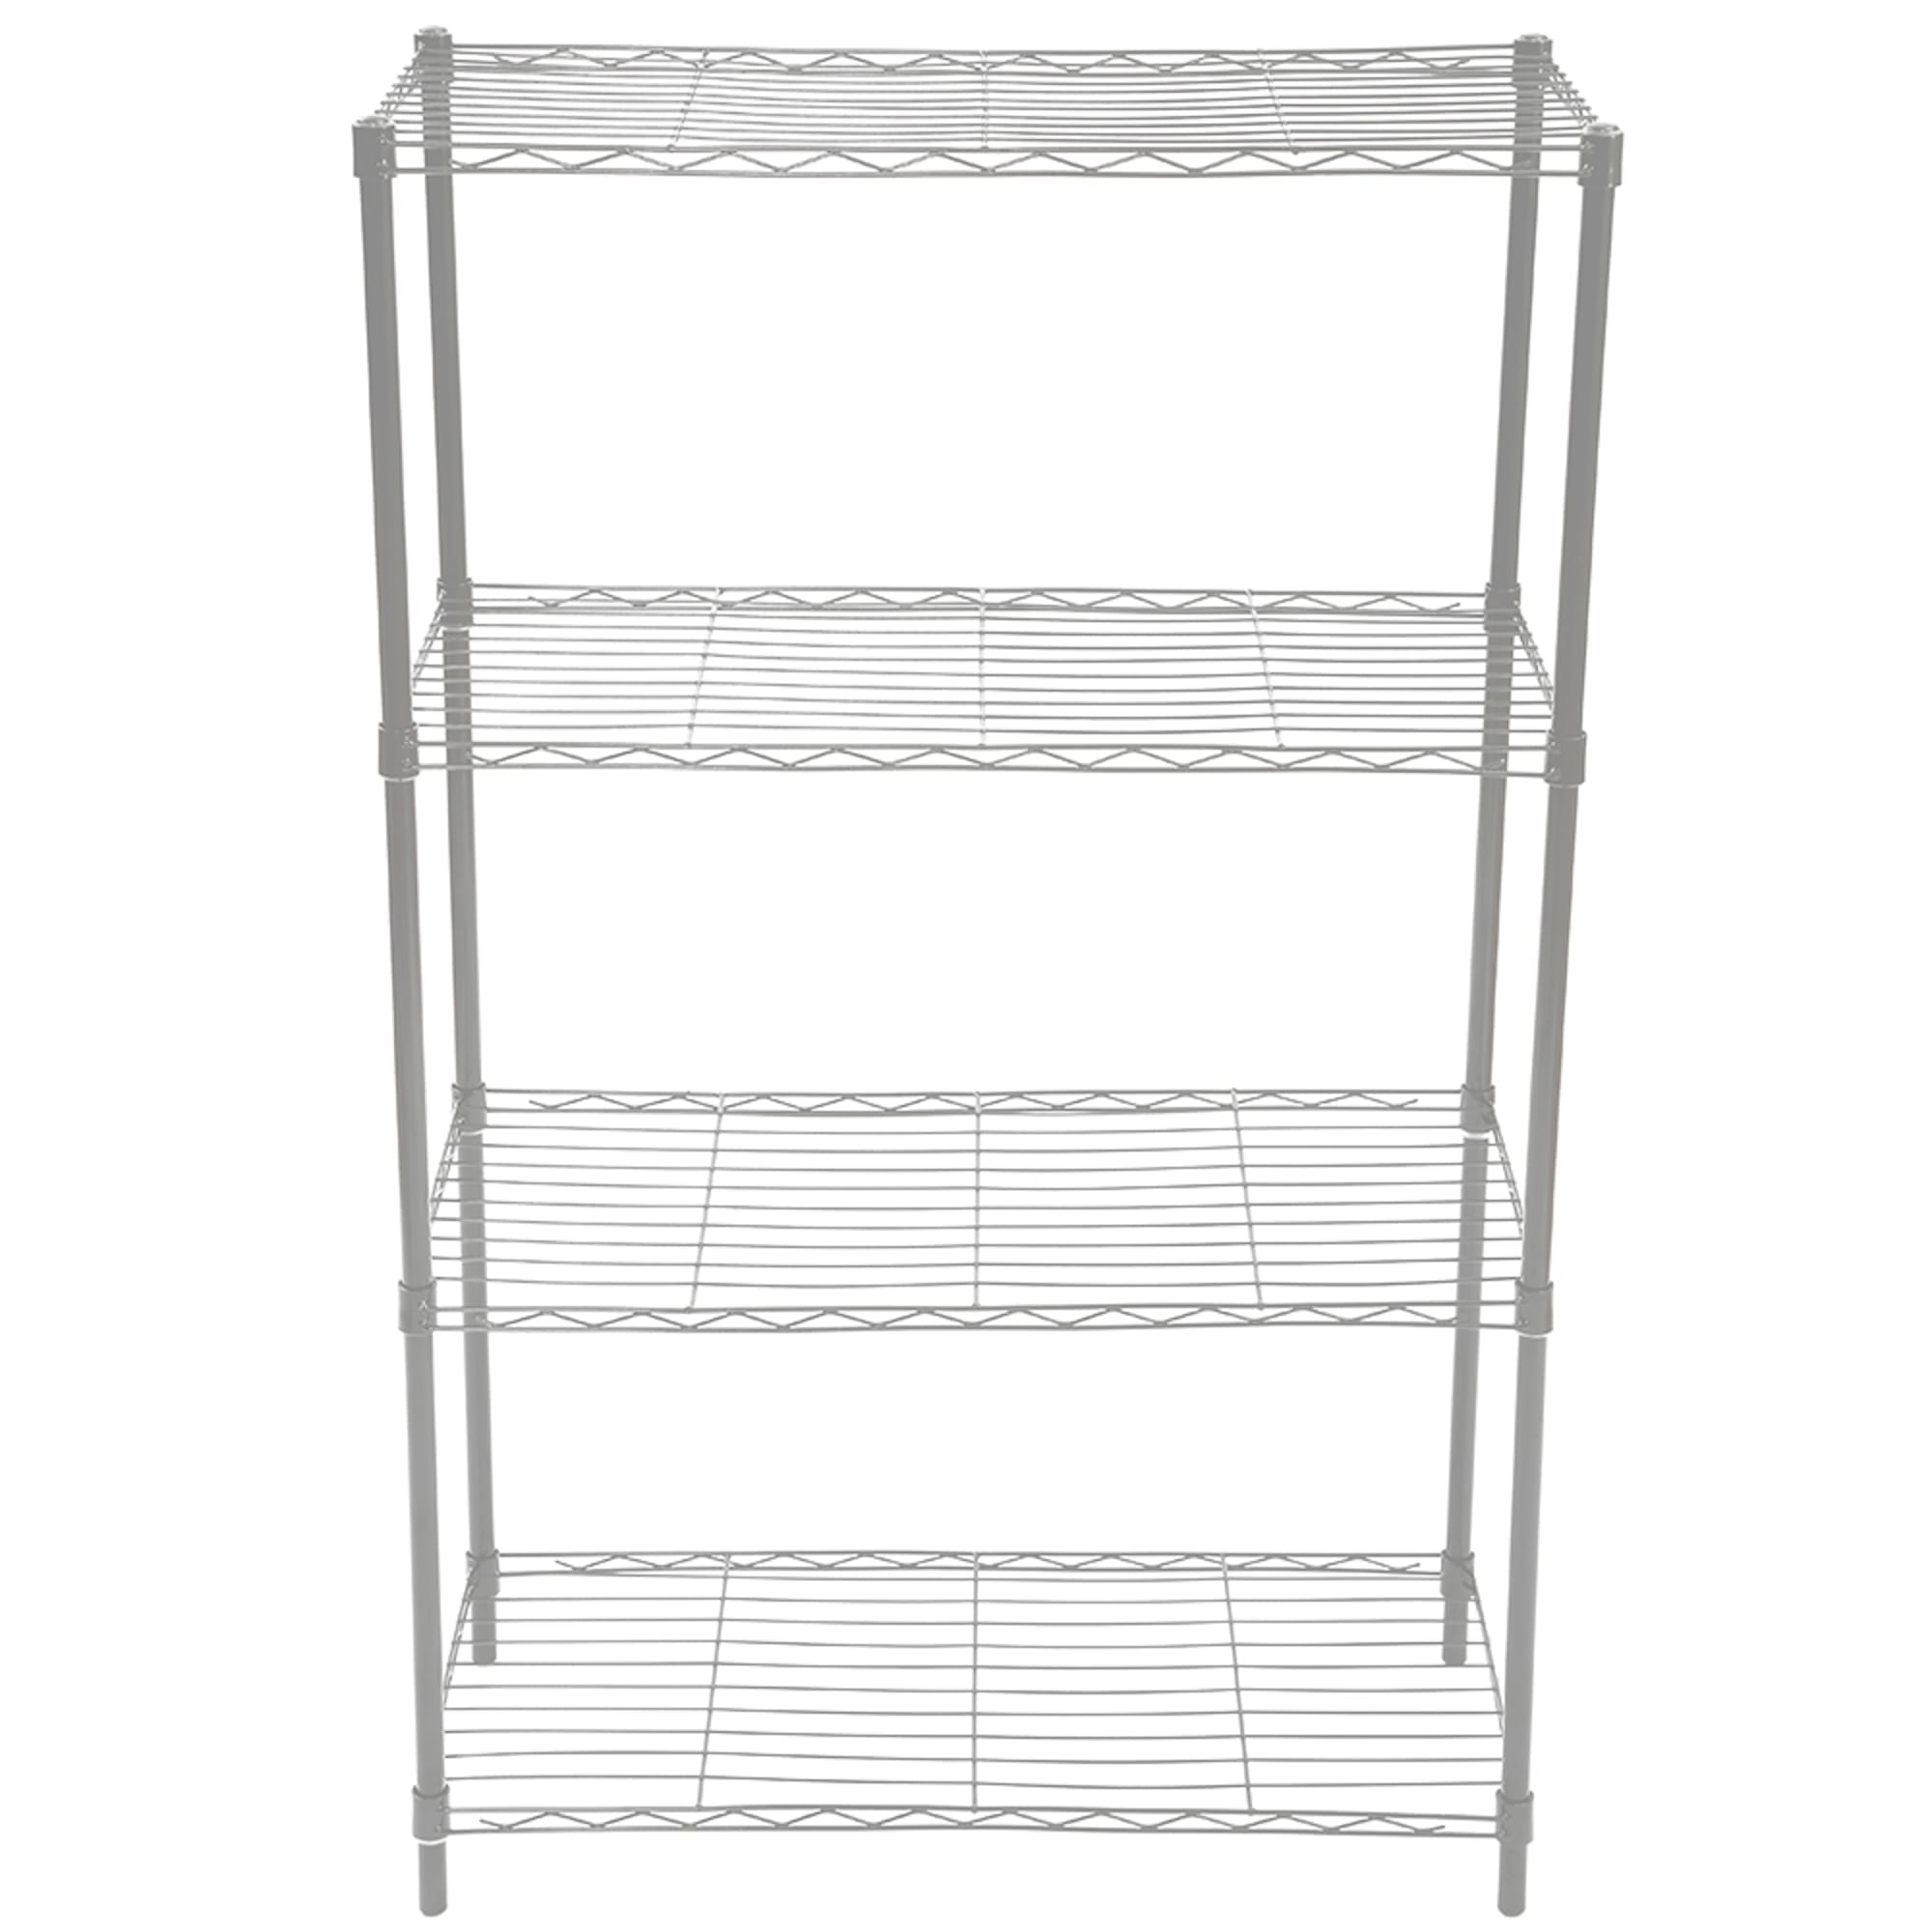 Home Basics 4 Tier Wide Steel Wire  Shelf, Grey $40.00 EACH, CASE PACK OF 4